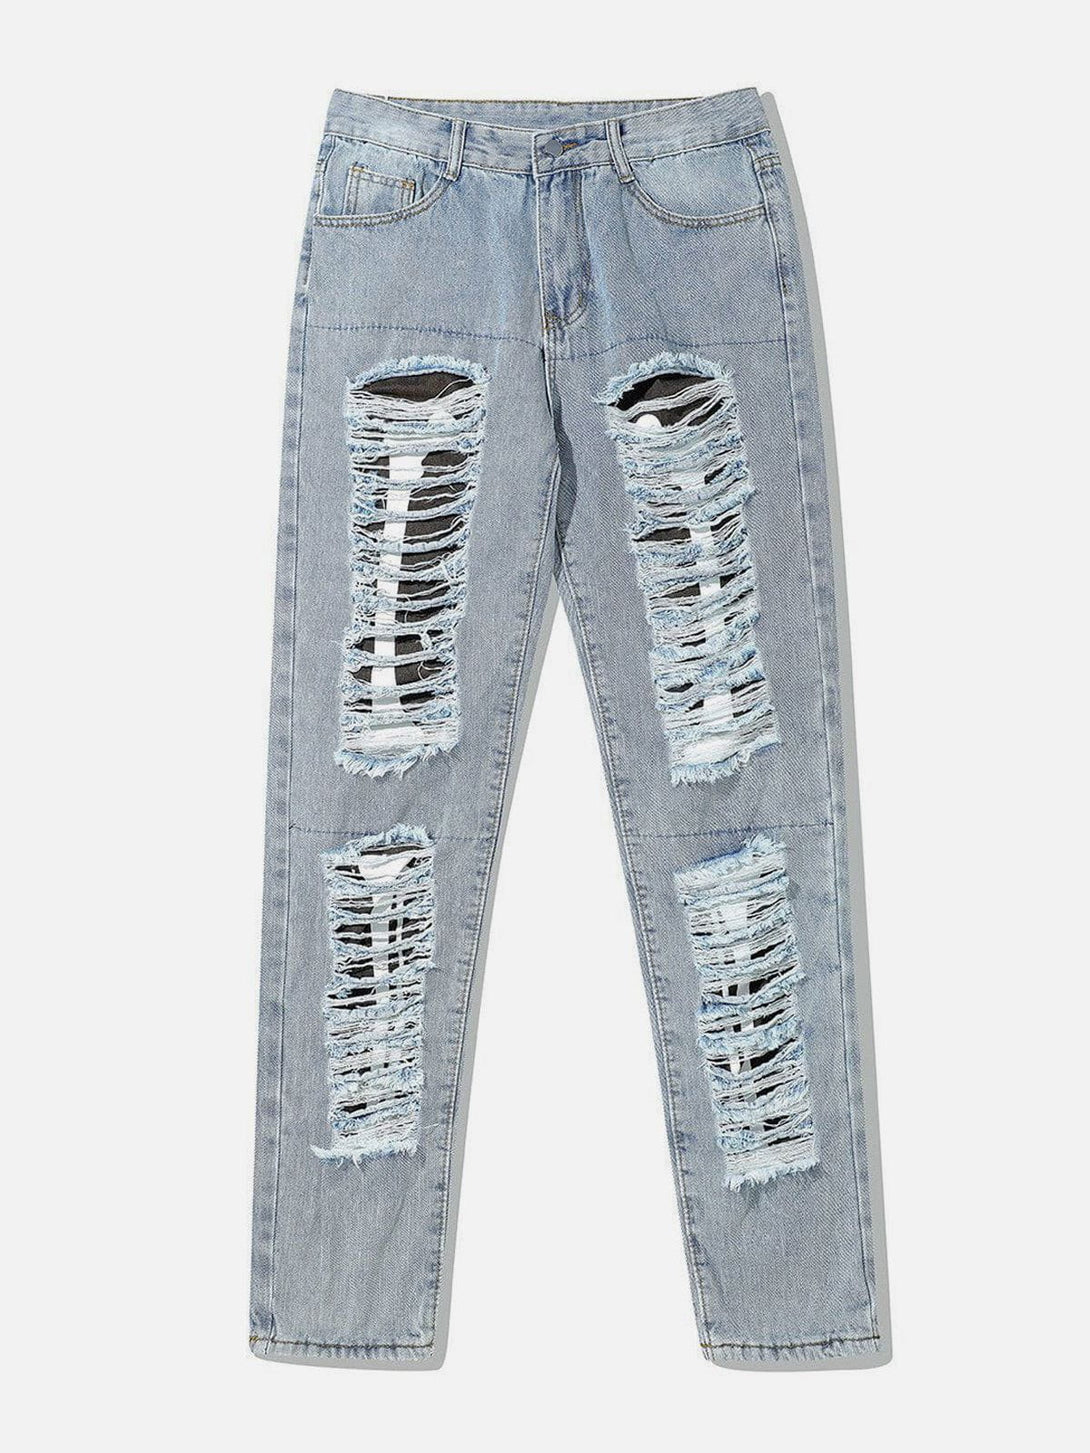 Majesda® - Holes To Hide Bones Jeans outfit ideas streetwear fashion